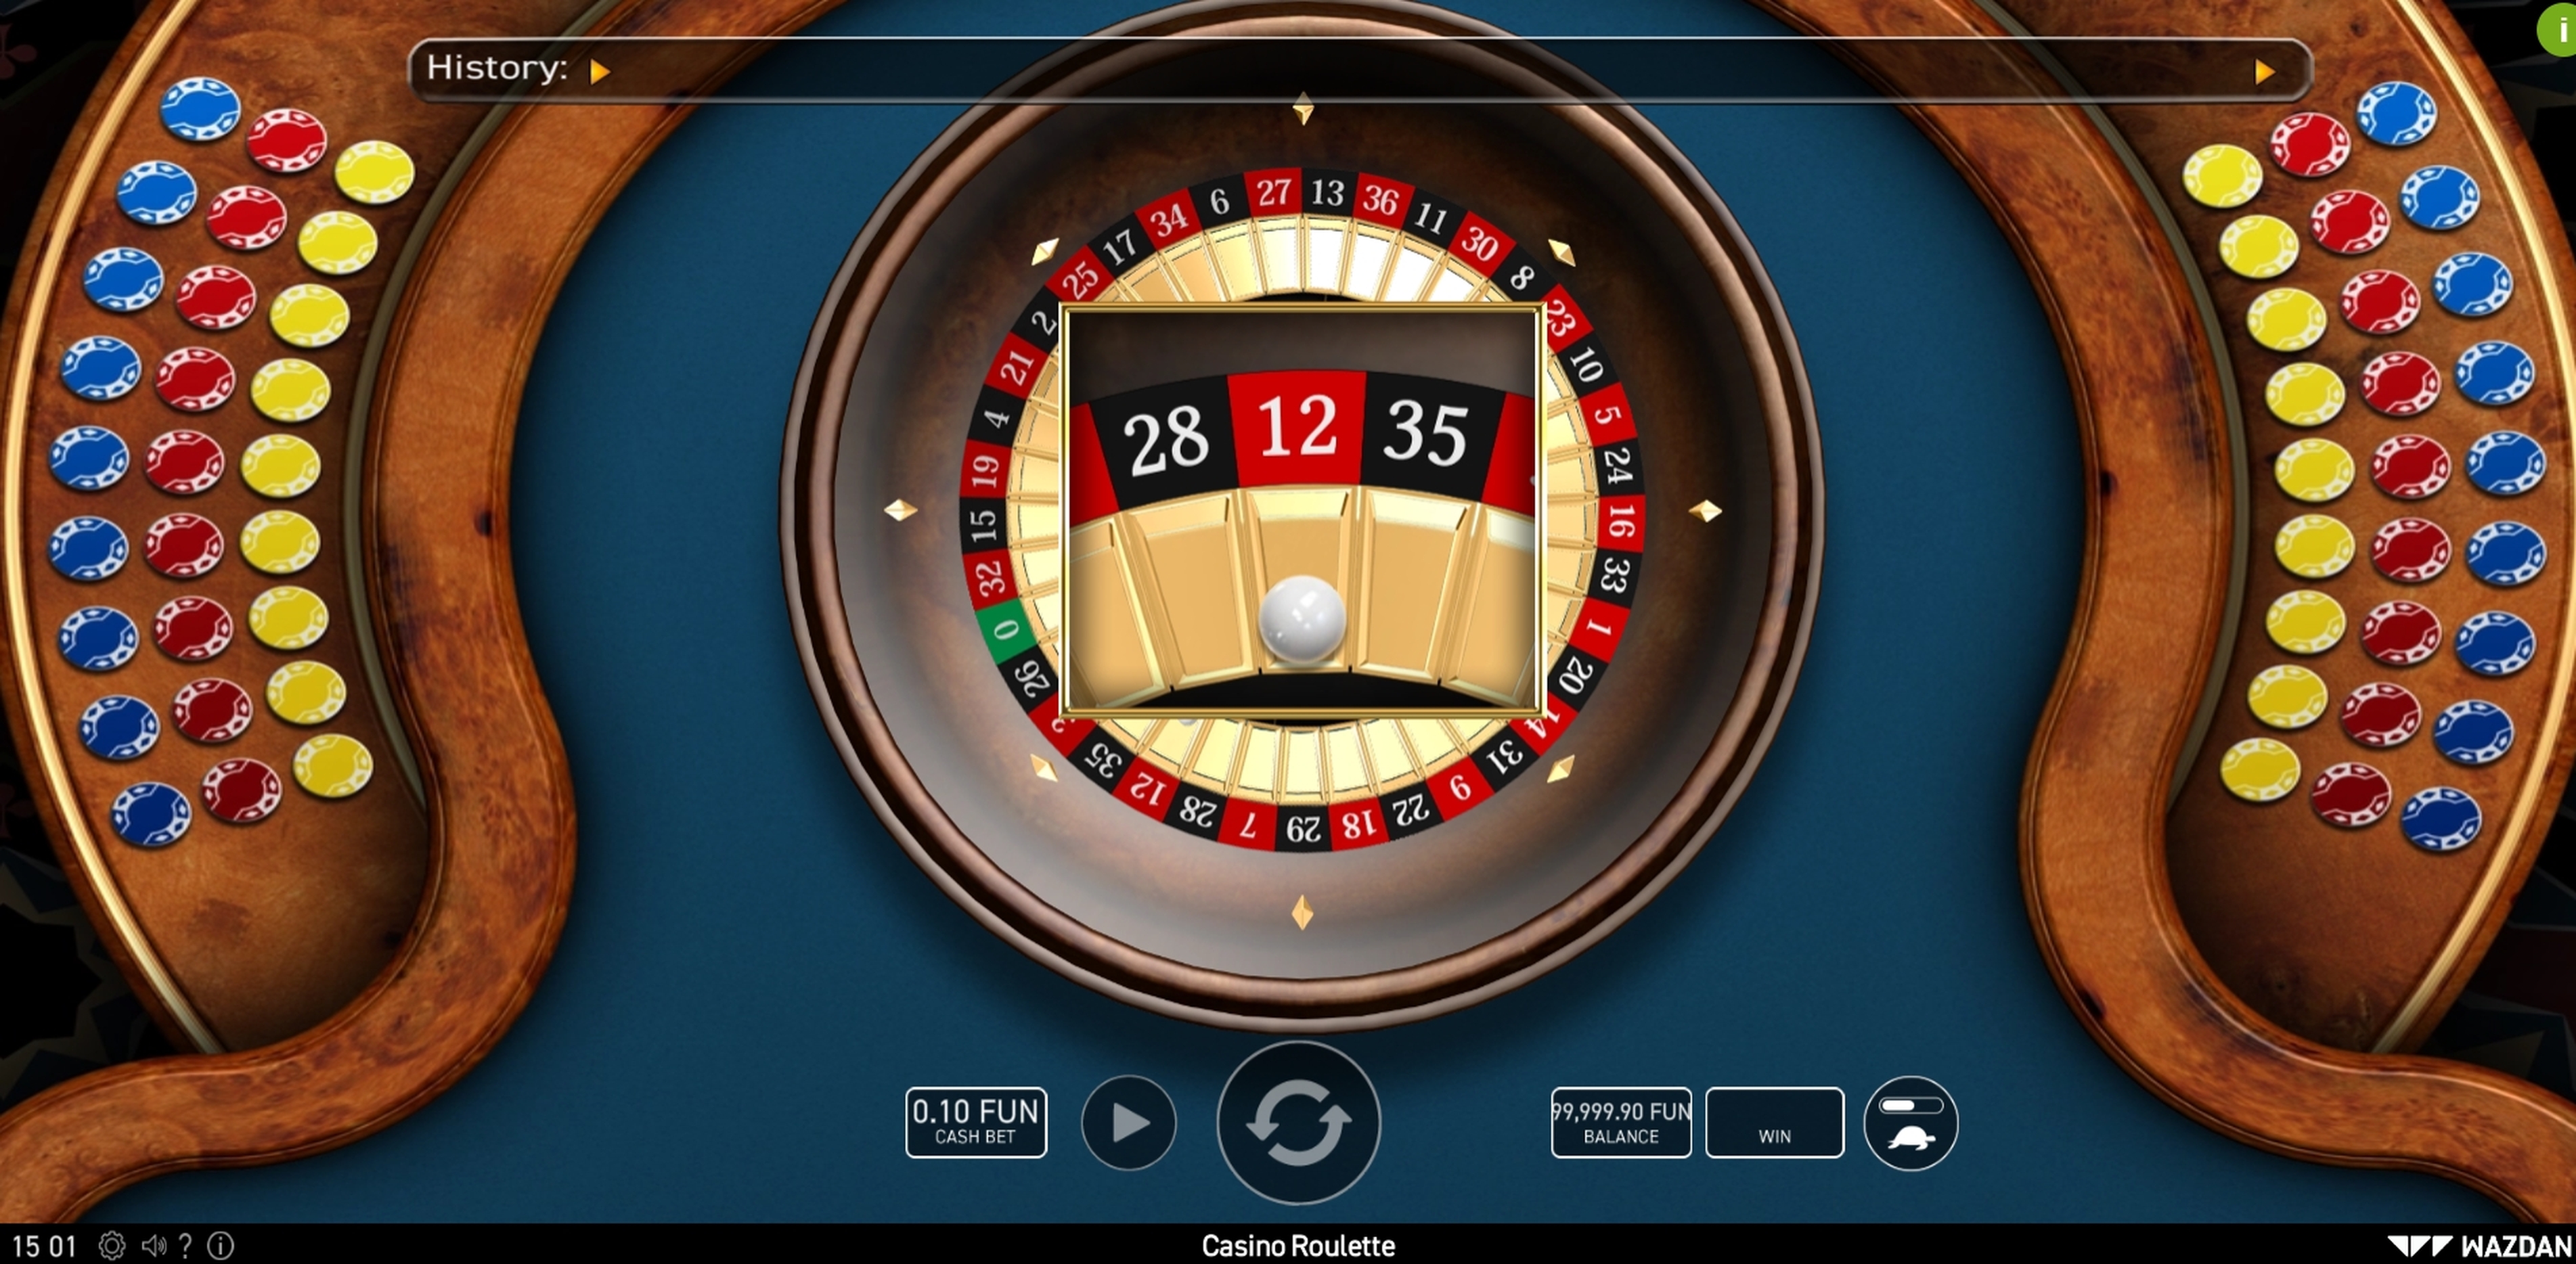 Win Money in Casino Roulette Free Slot Game by Wazdan